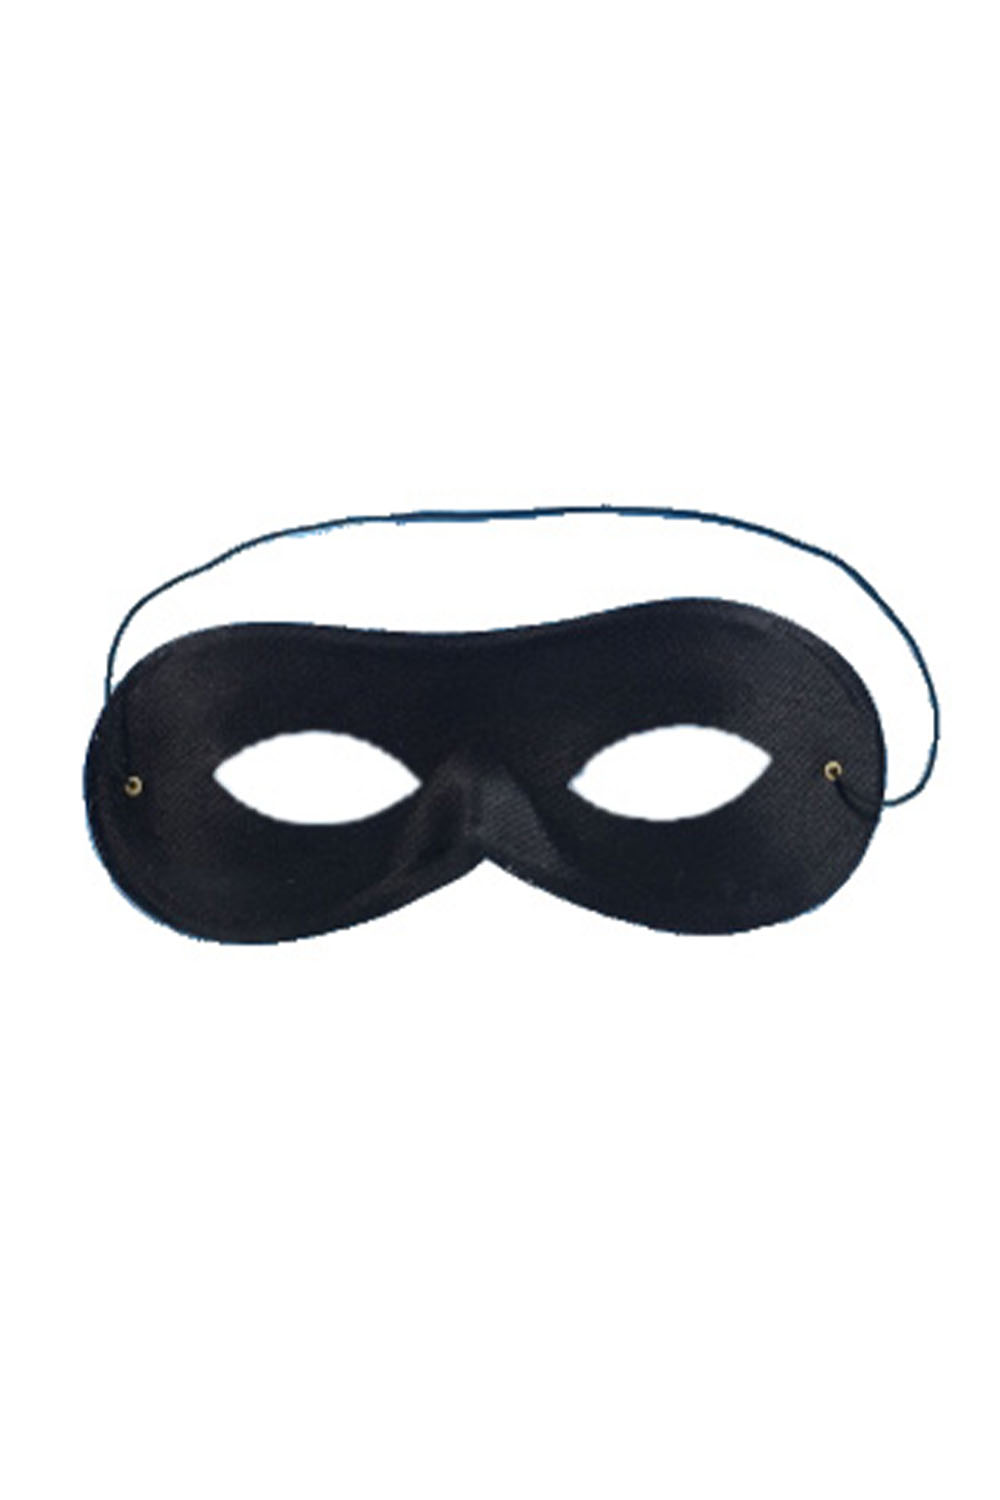 Black Domino Shape Cloth Eye Mask (Pack of 12)